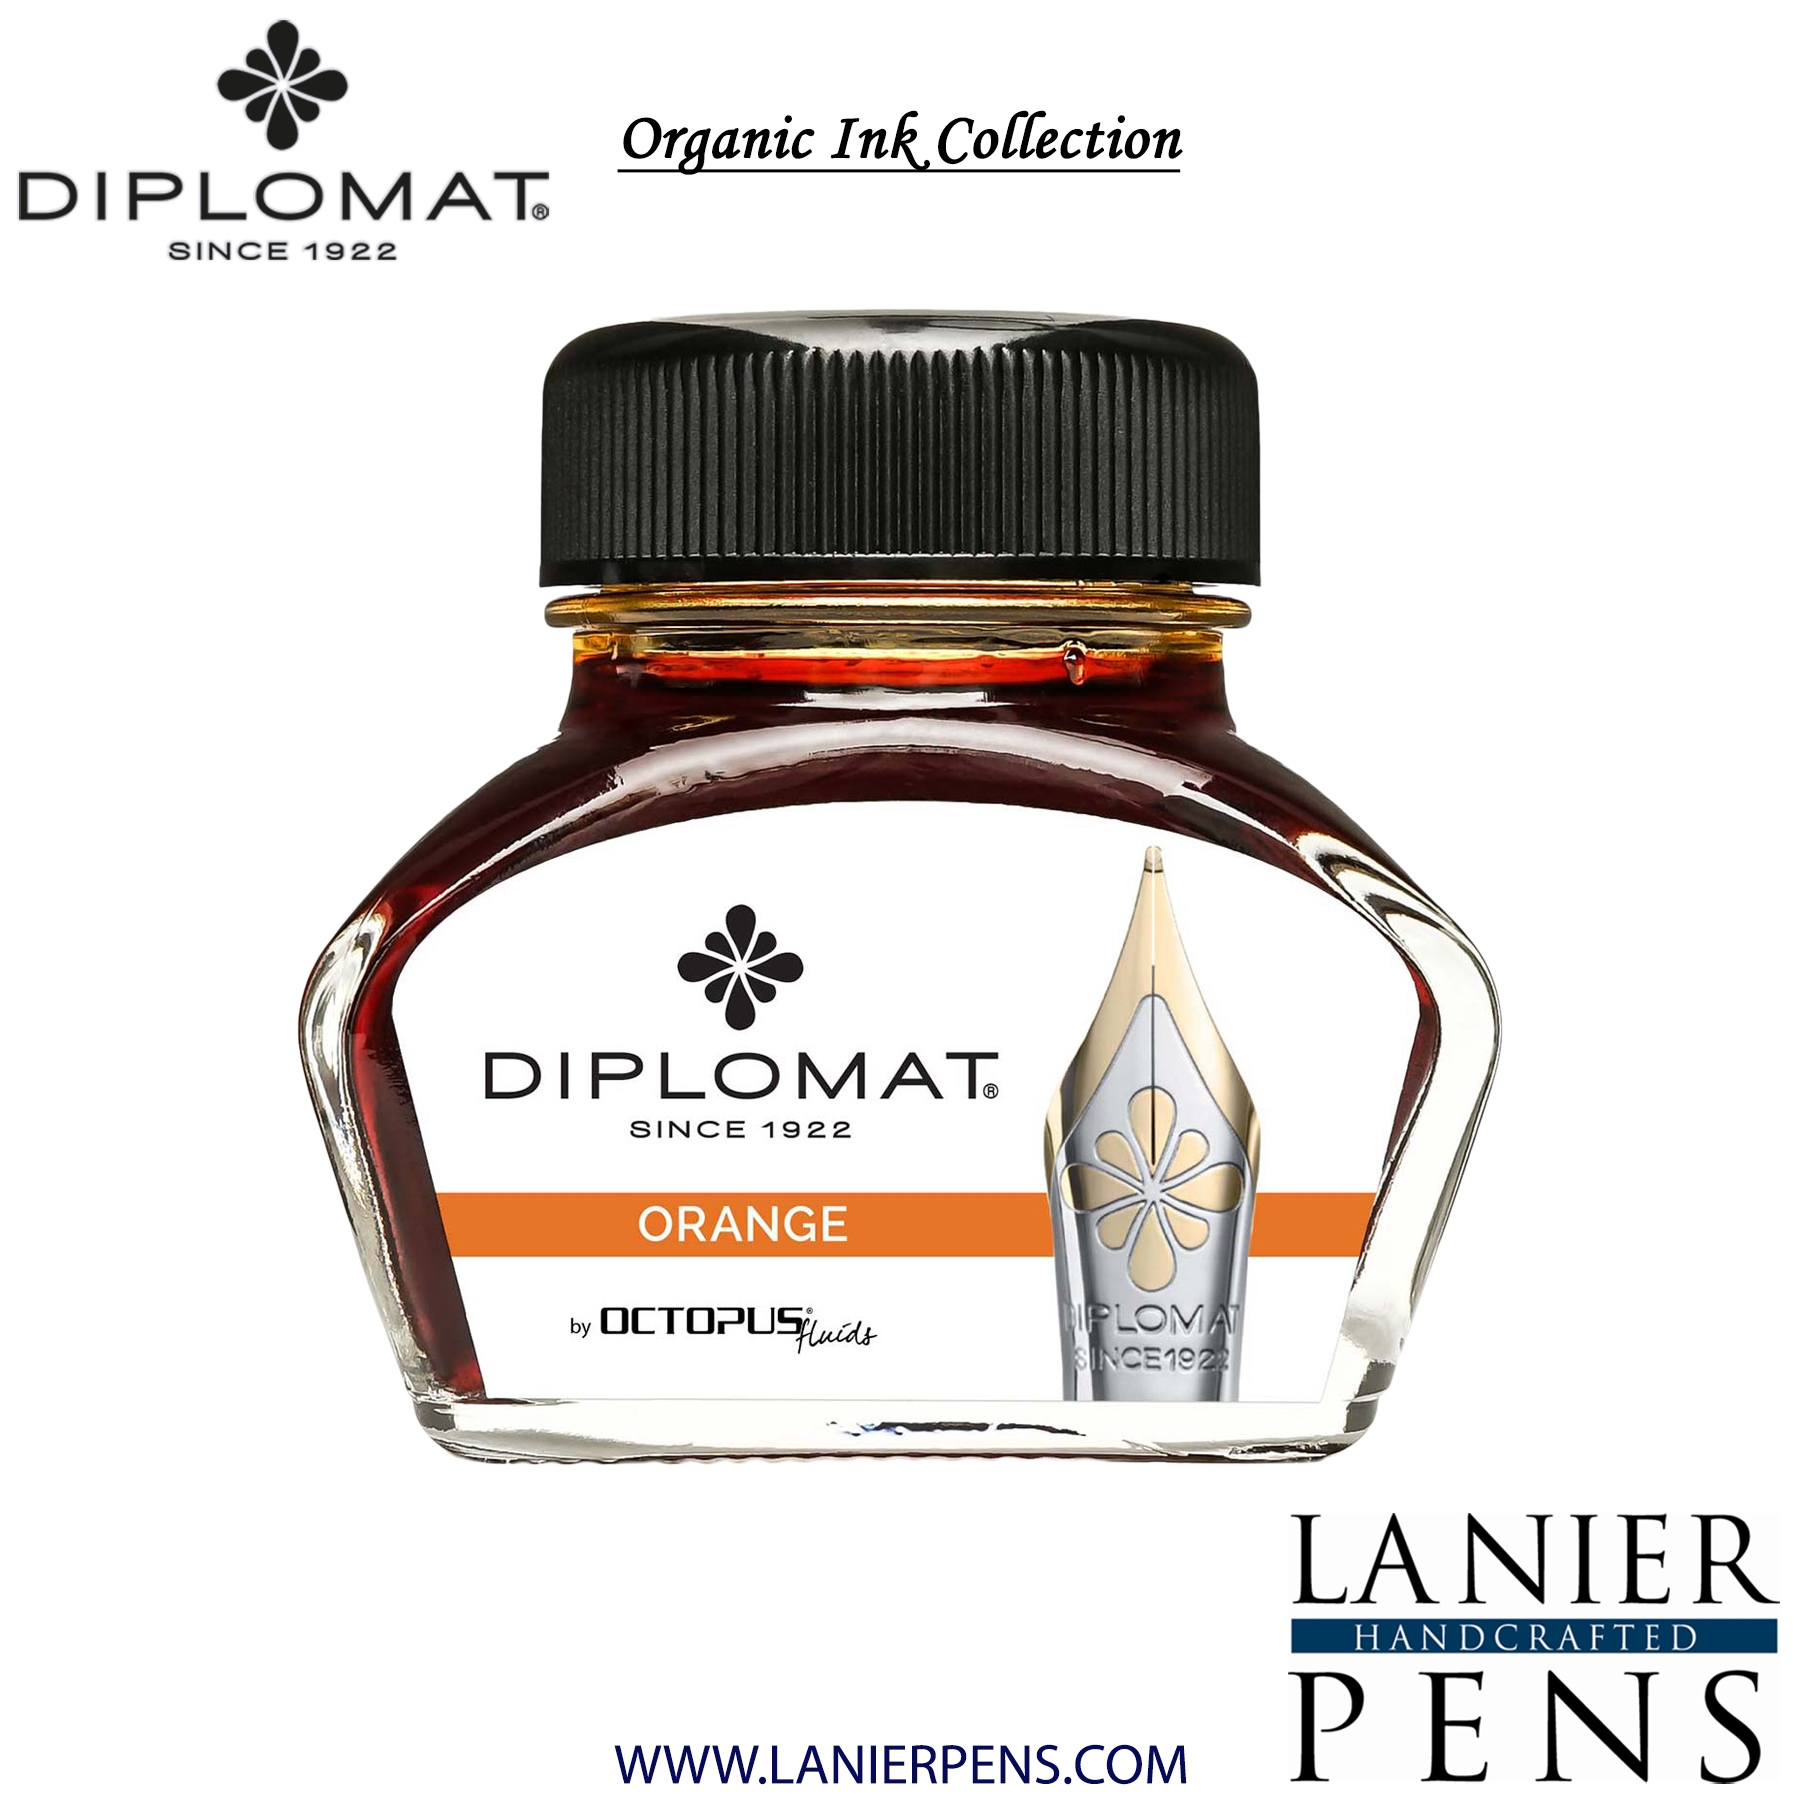 Diplomat Orange Ink Bottle, 30ml by Lanier Pens, lanierpens, lanierpens.com, wndpens, WOOD N DREAMS, Pensbylanier